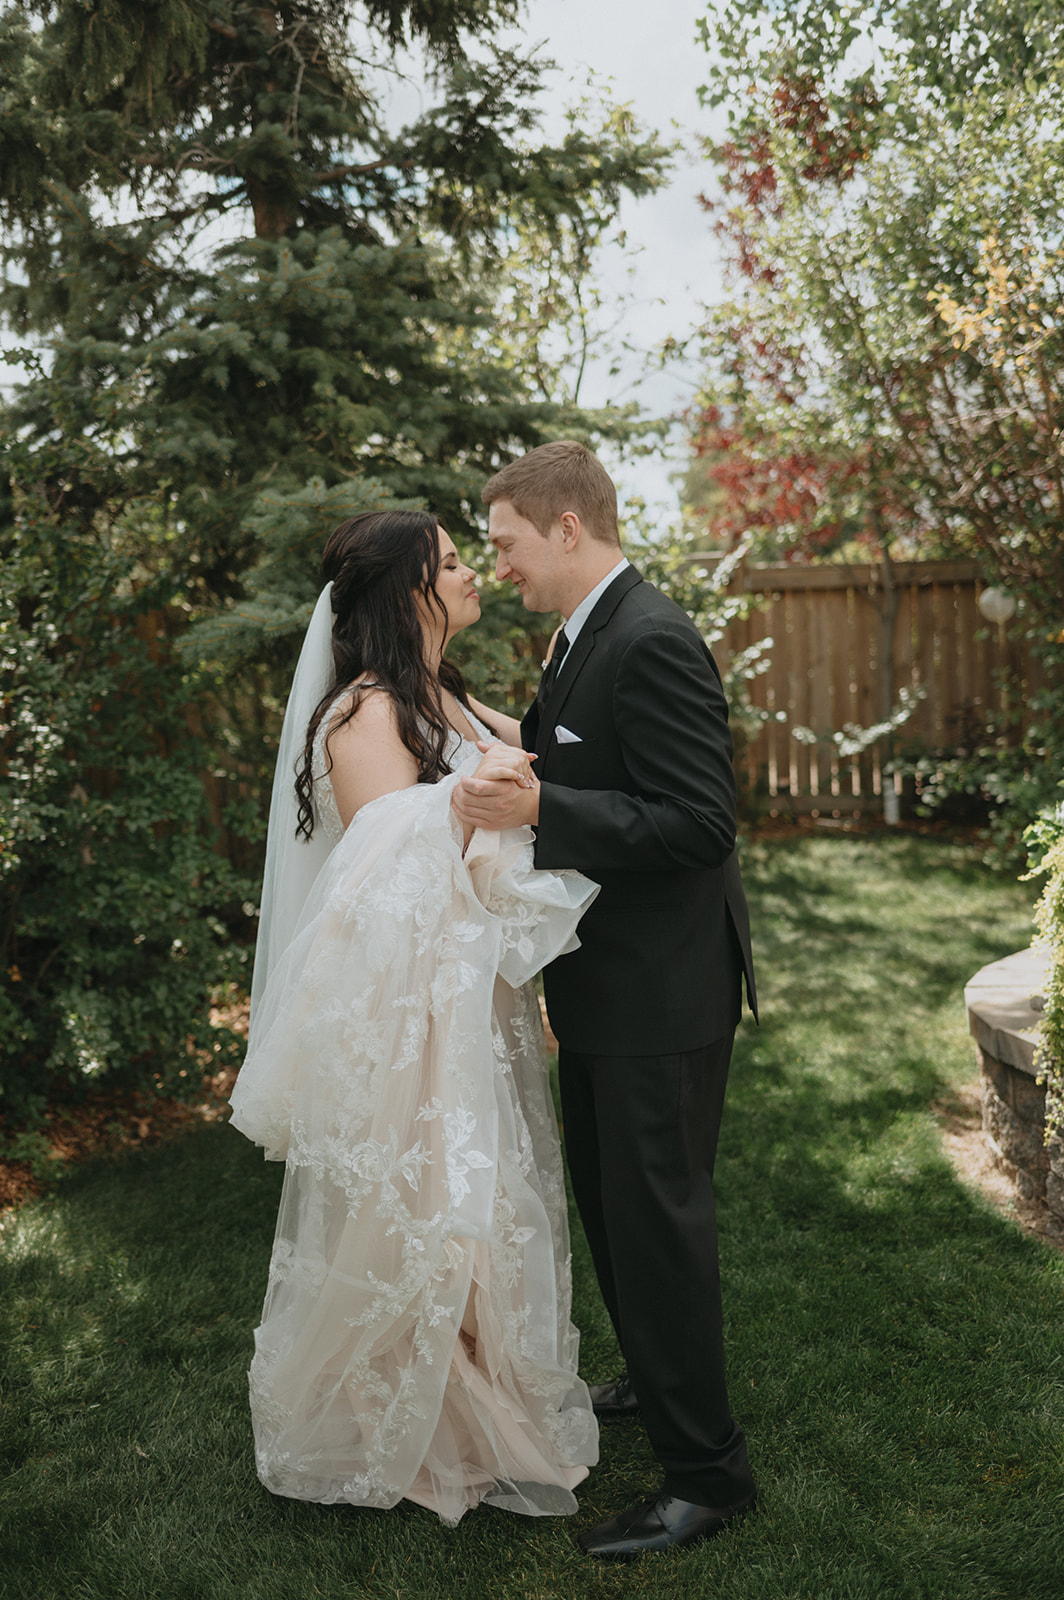 John & Shayna – Intimate Garden Wedding